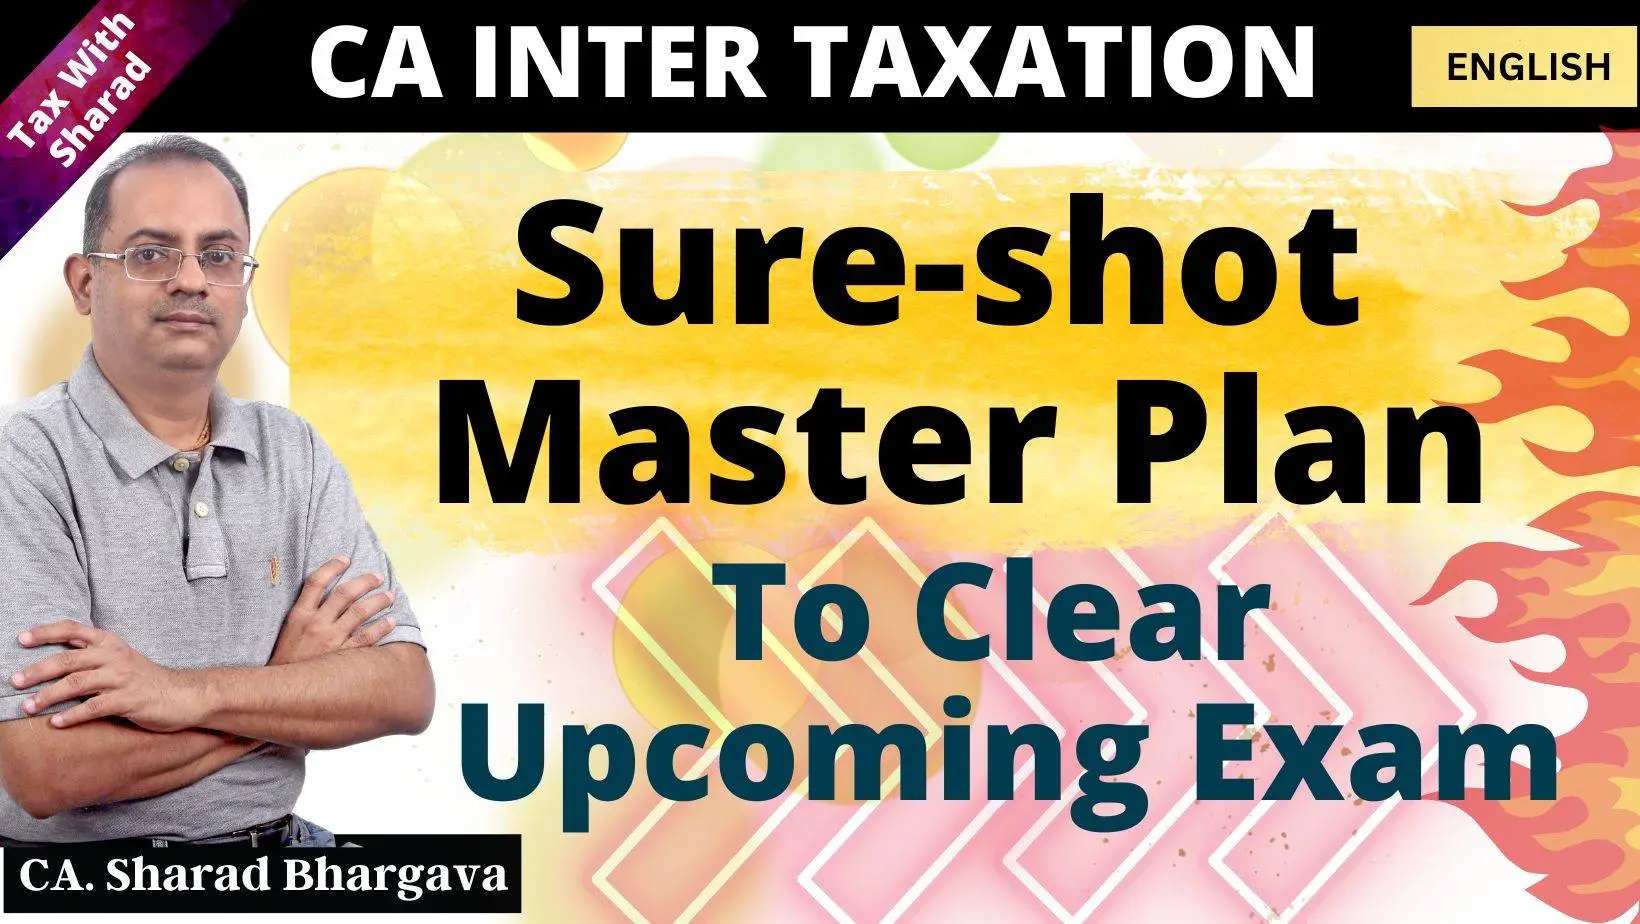 Sure-shot Master Plan to clear CA Inter Tax Exam / CA. Sharad Bhargava